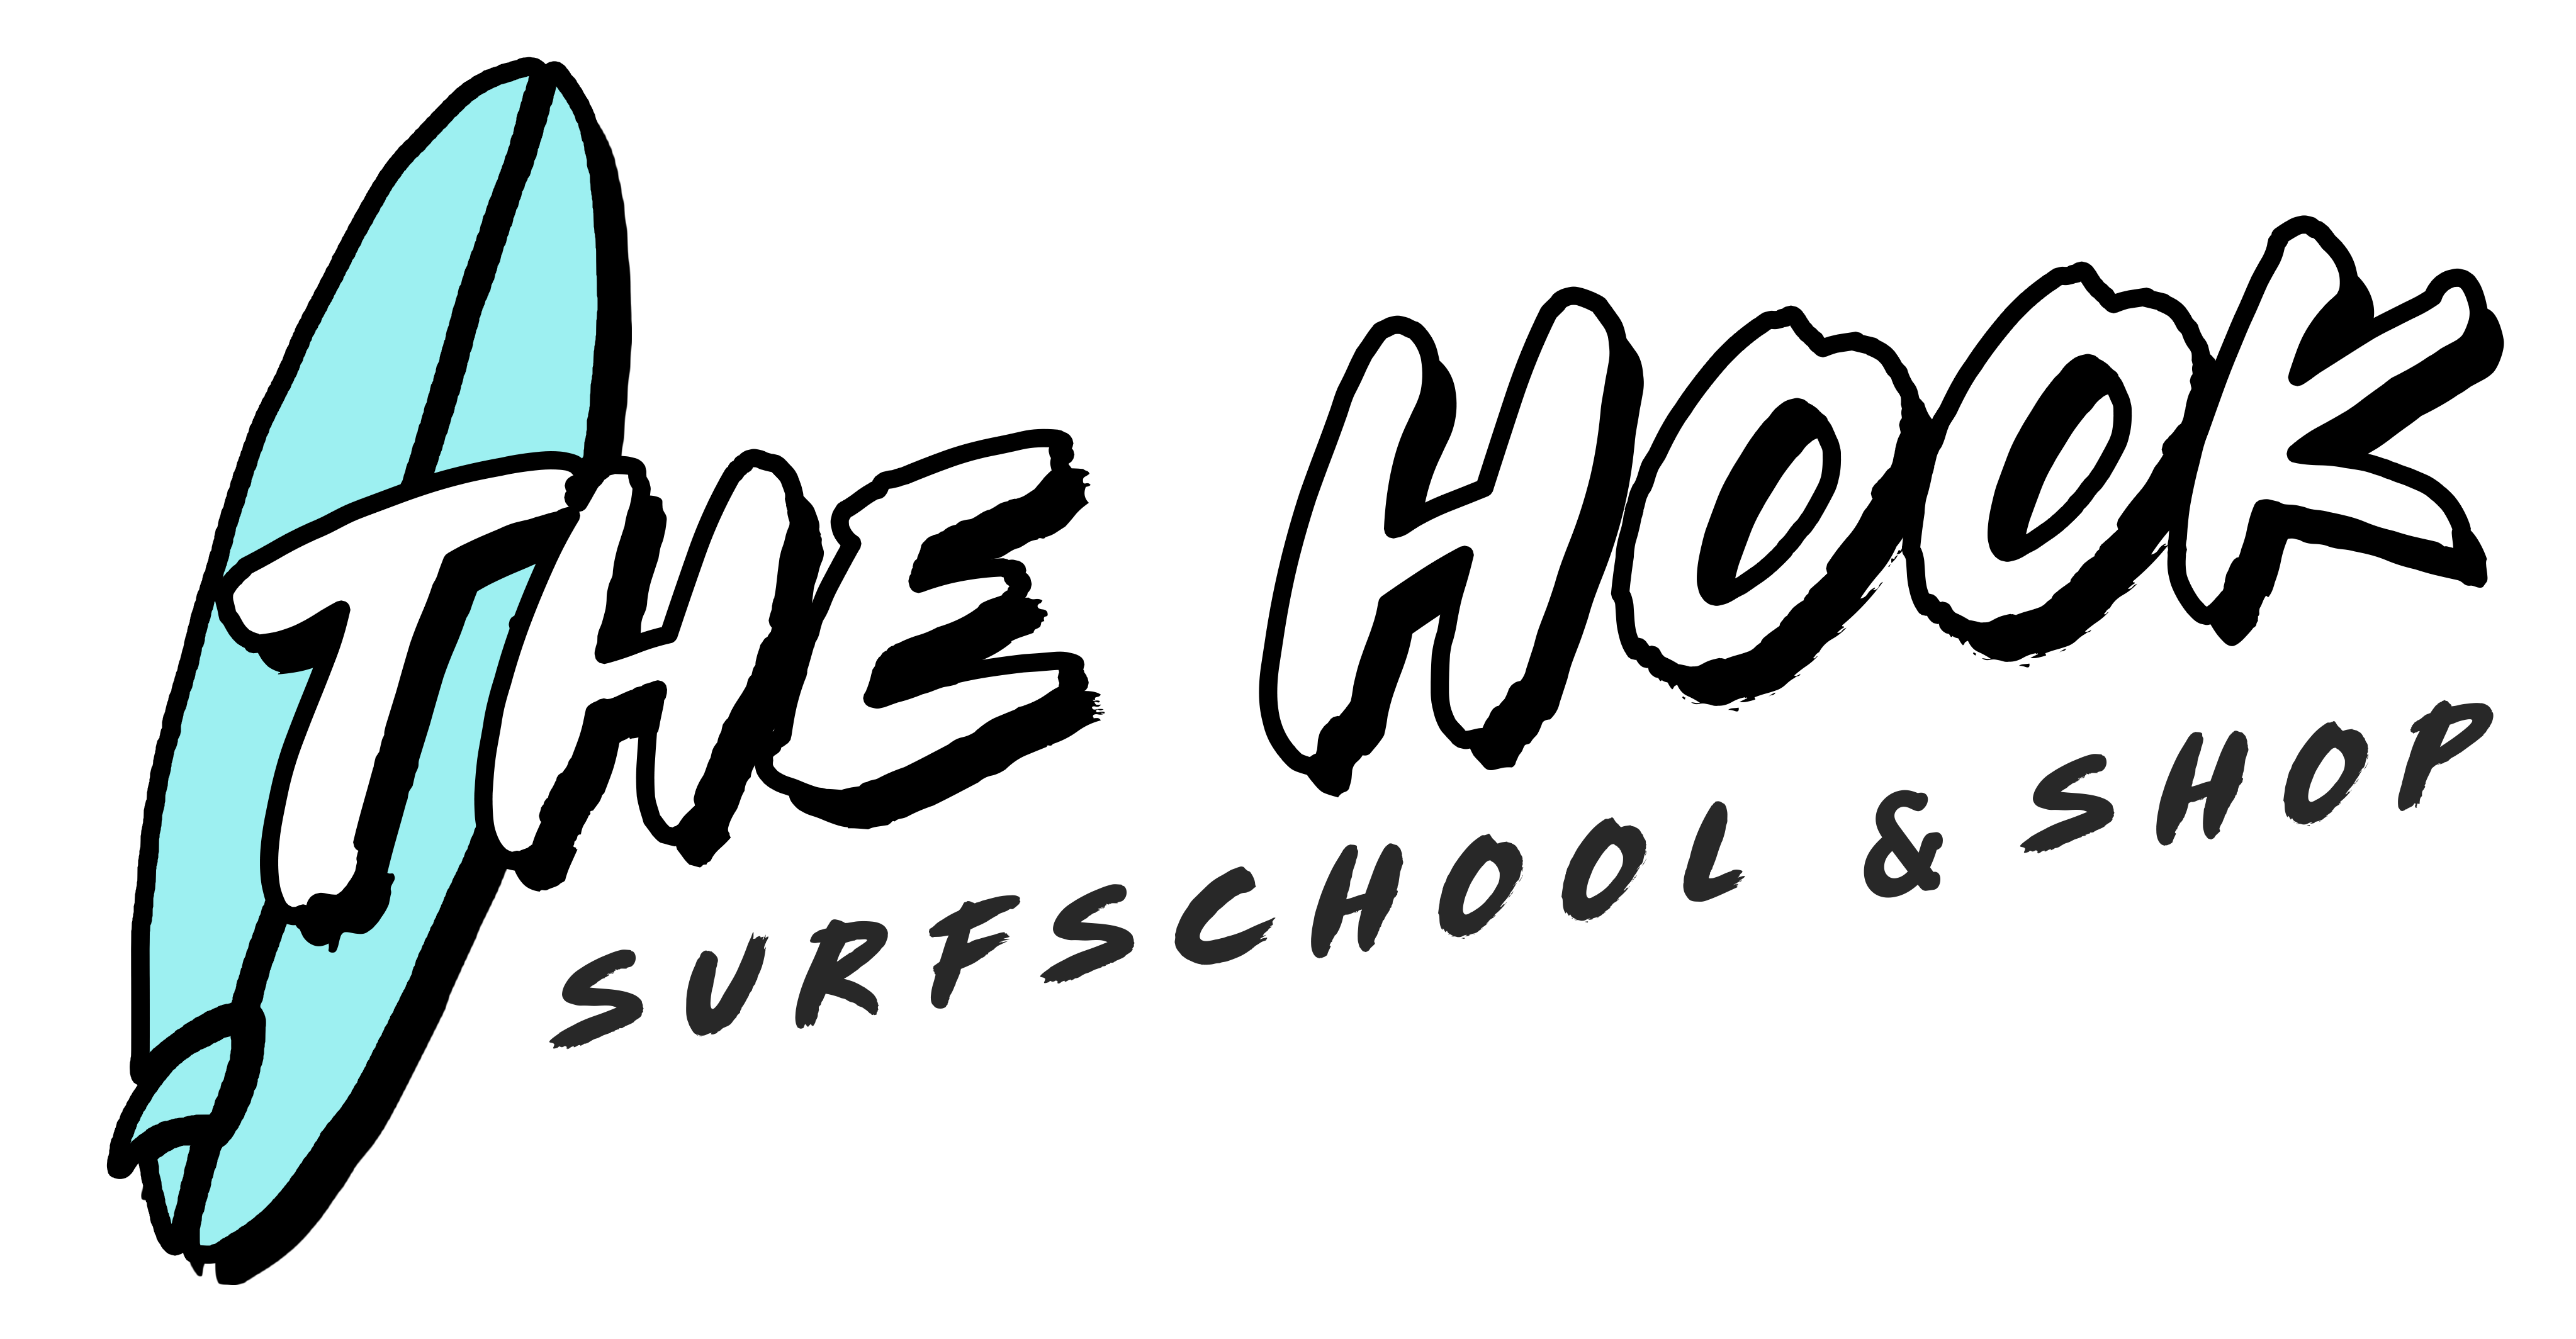 The Hook | Surfschool & Shop